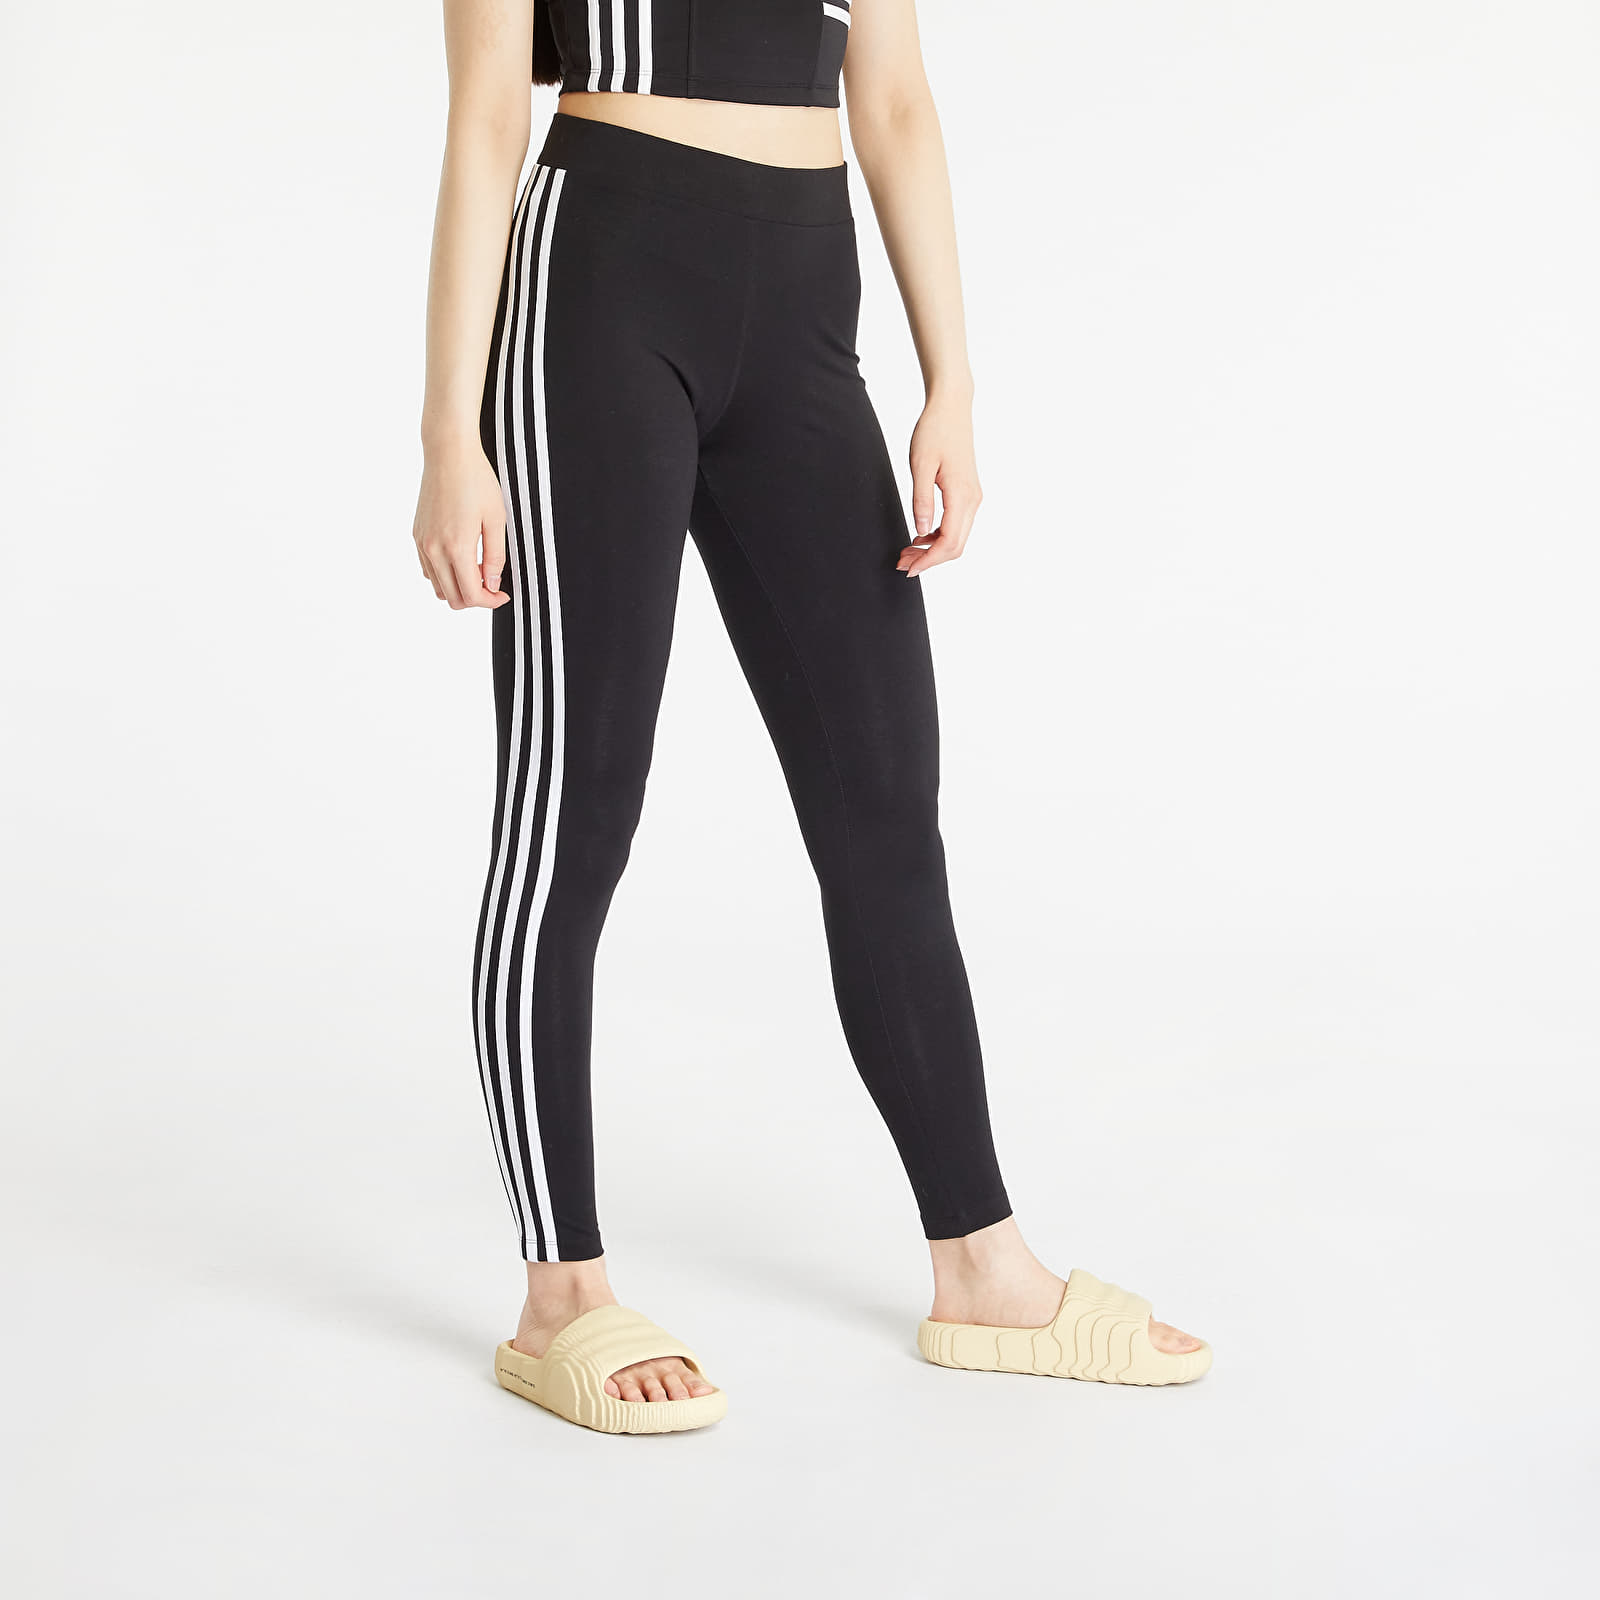 Clothing - 3-Stripes Leggings - Black | adidas South Africa